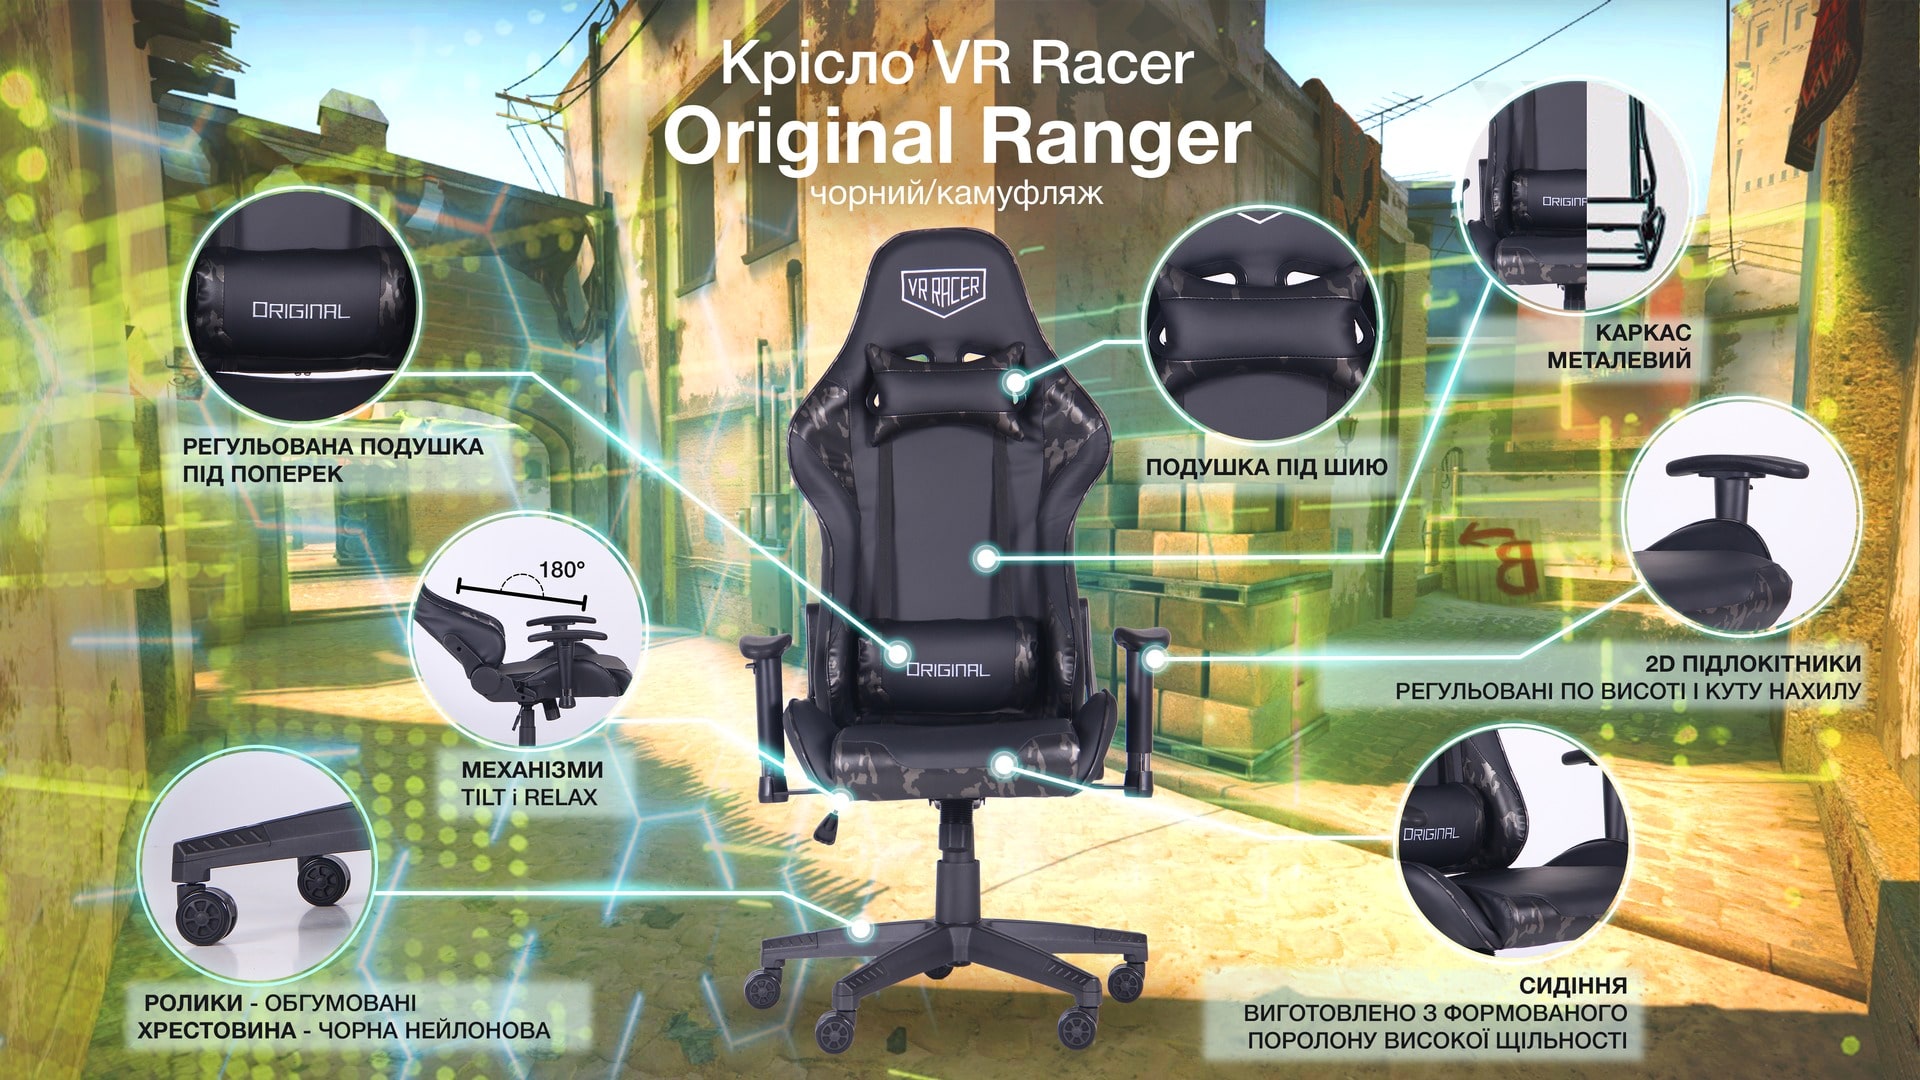 Крісло VR Racer Original Ranger опис